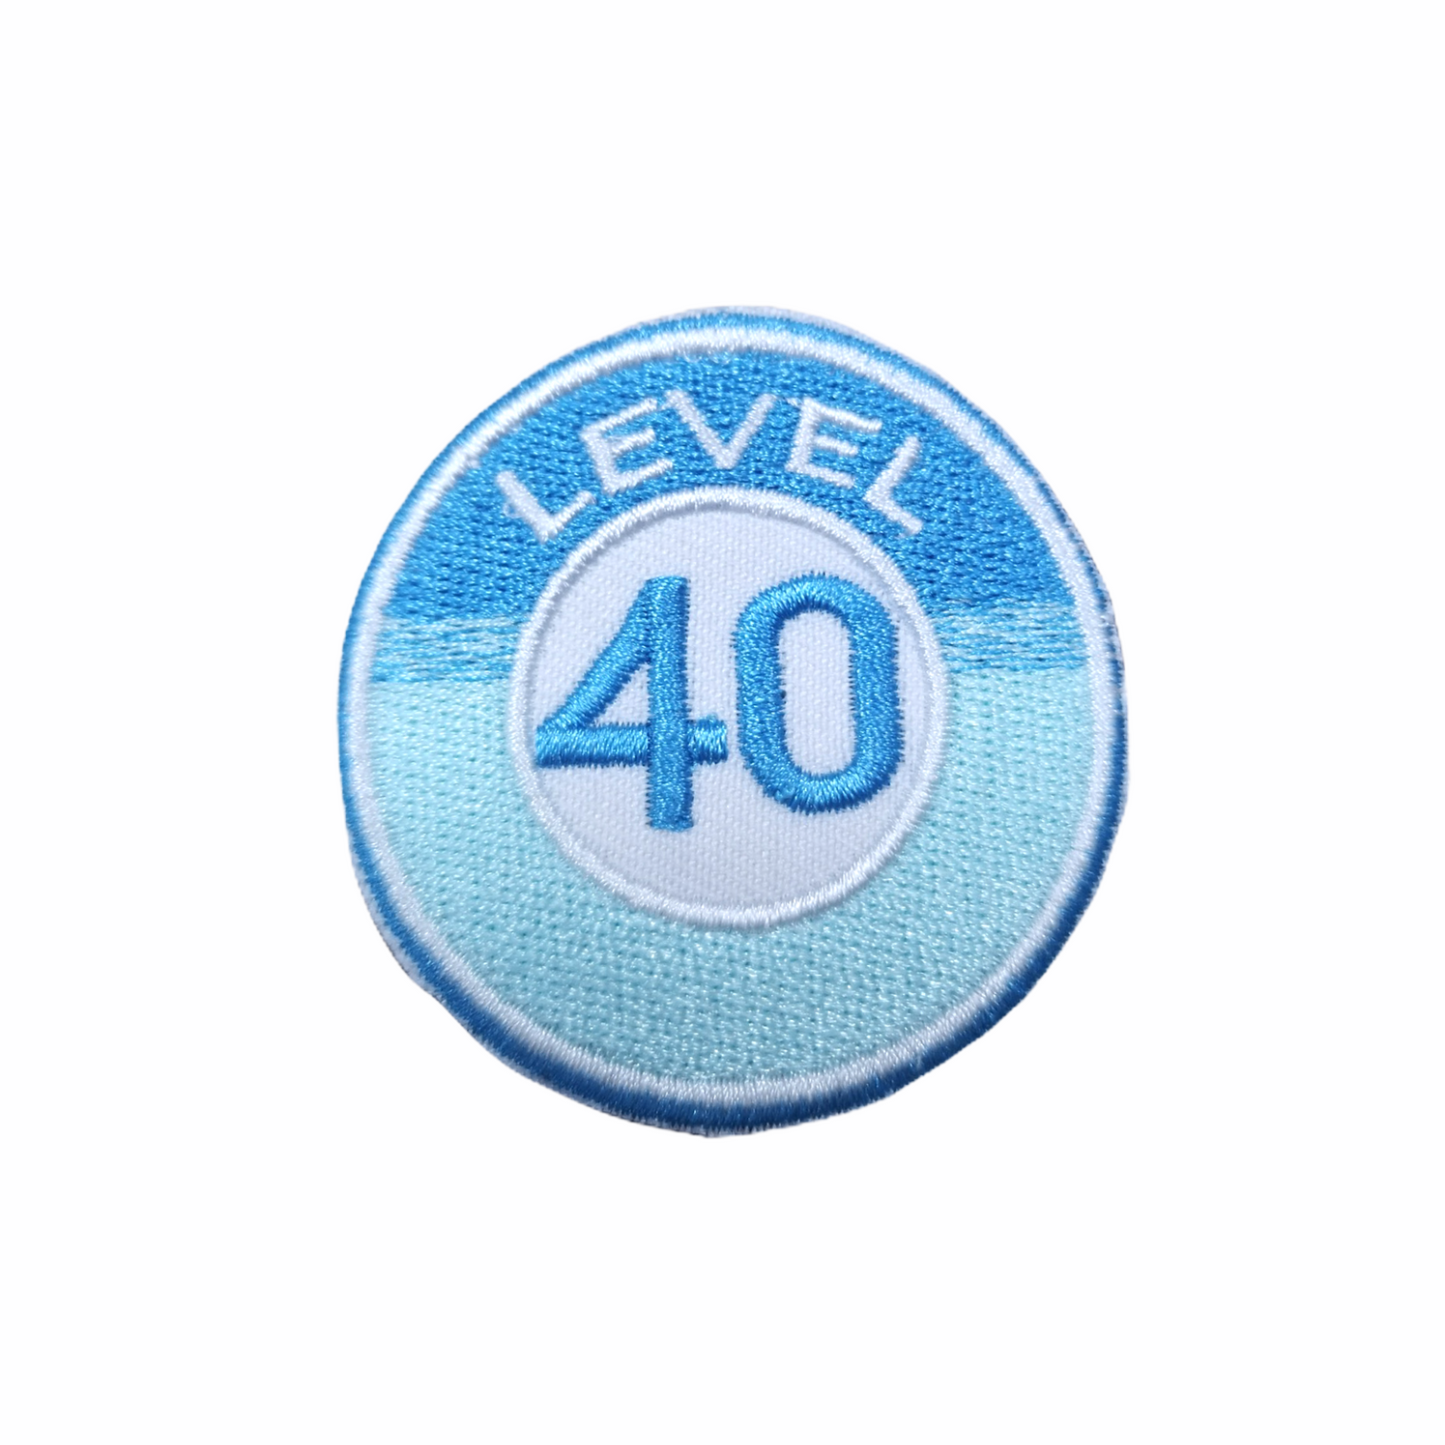 Level 40 Badge